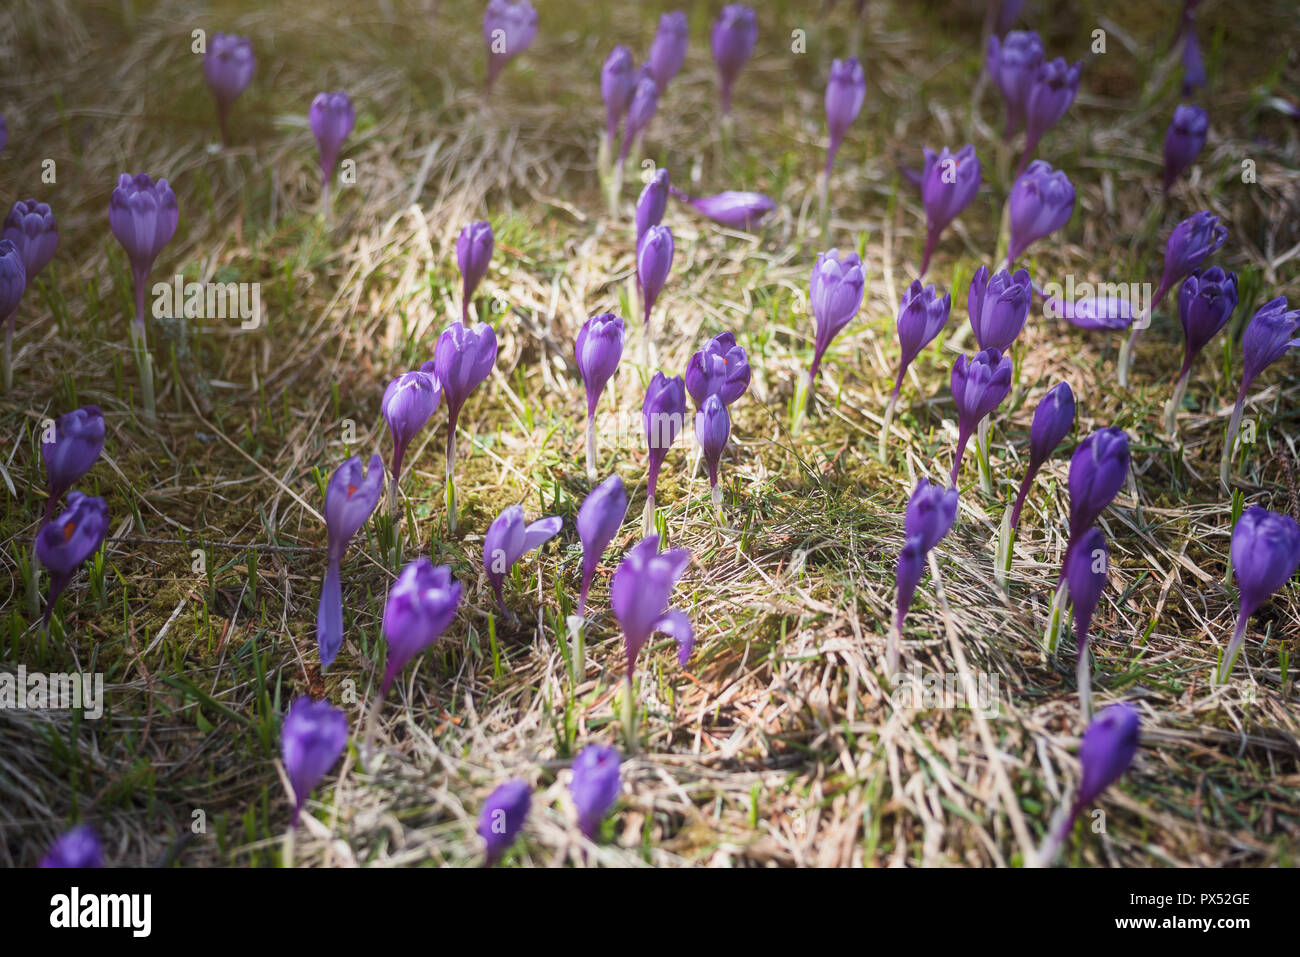 Lawn of purple crocuses under sunlight in spring Stock Photo